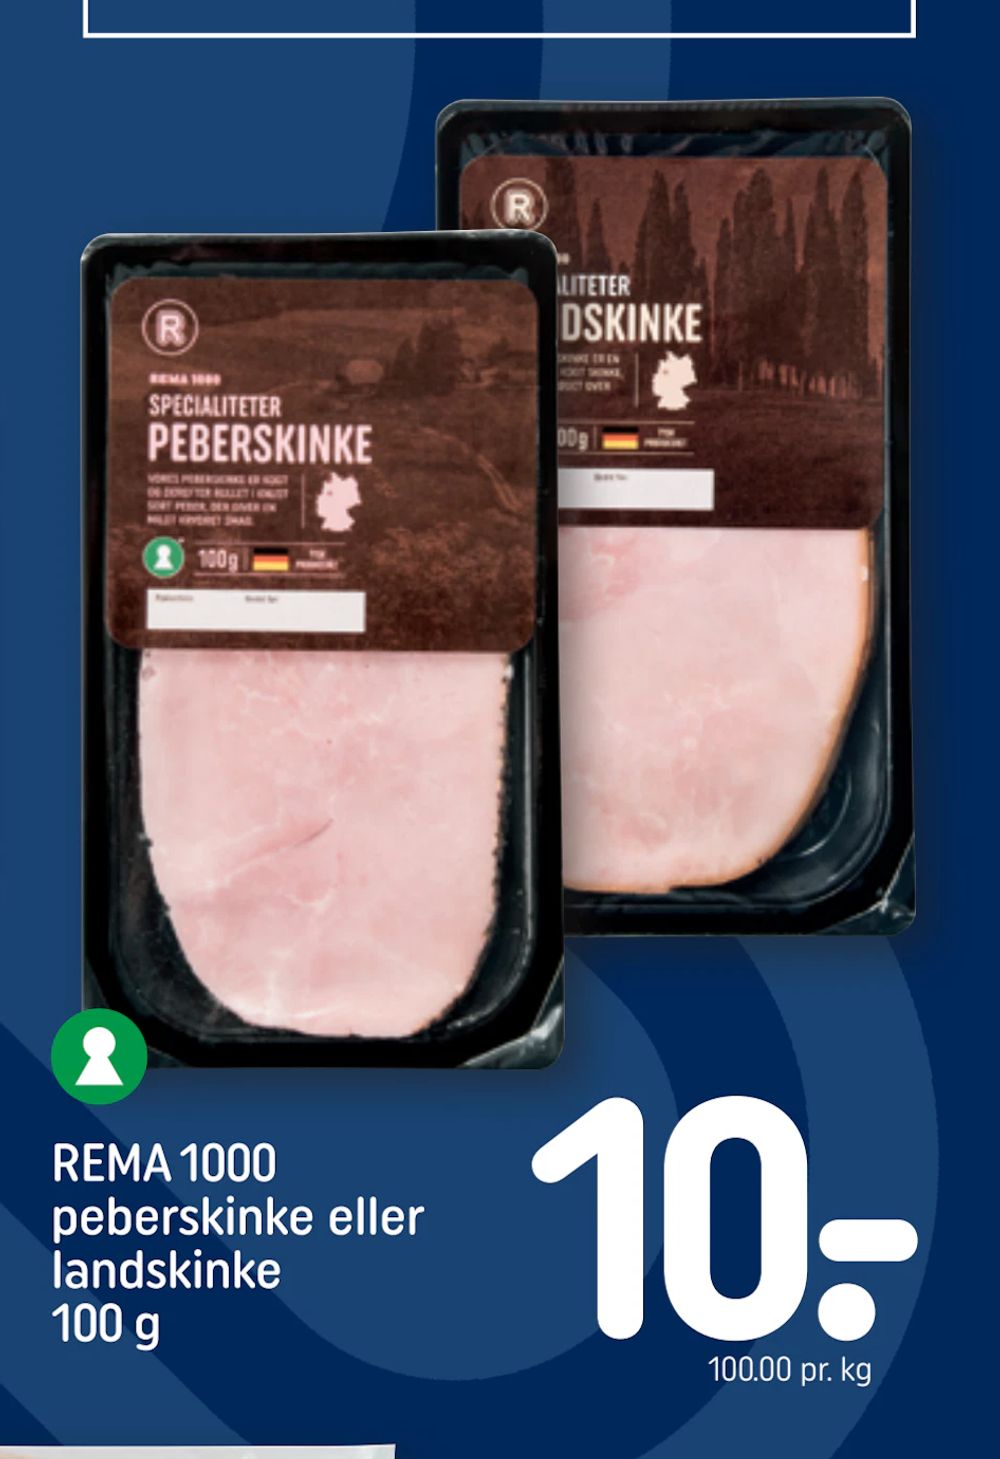 Tilbud på REMA 1000 peberskinke eller landskinke 100 g fra REMA 1000 til 10 kr.